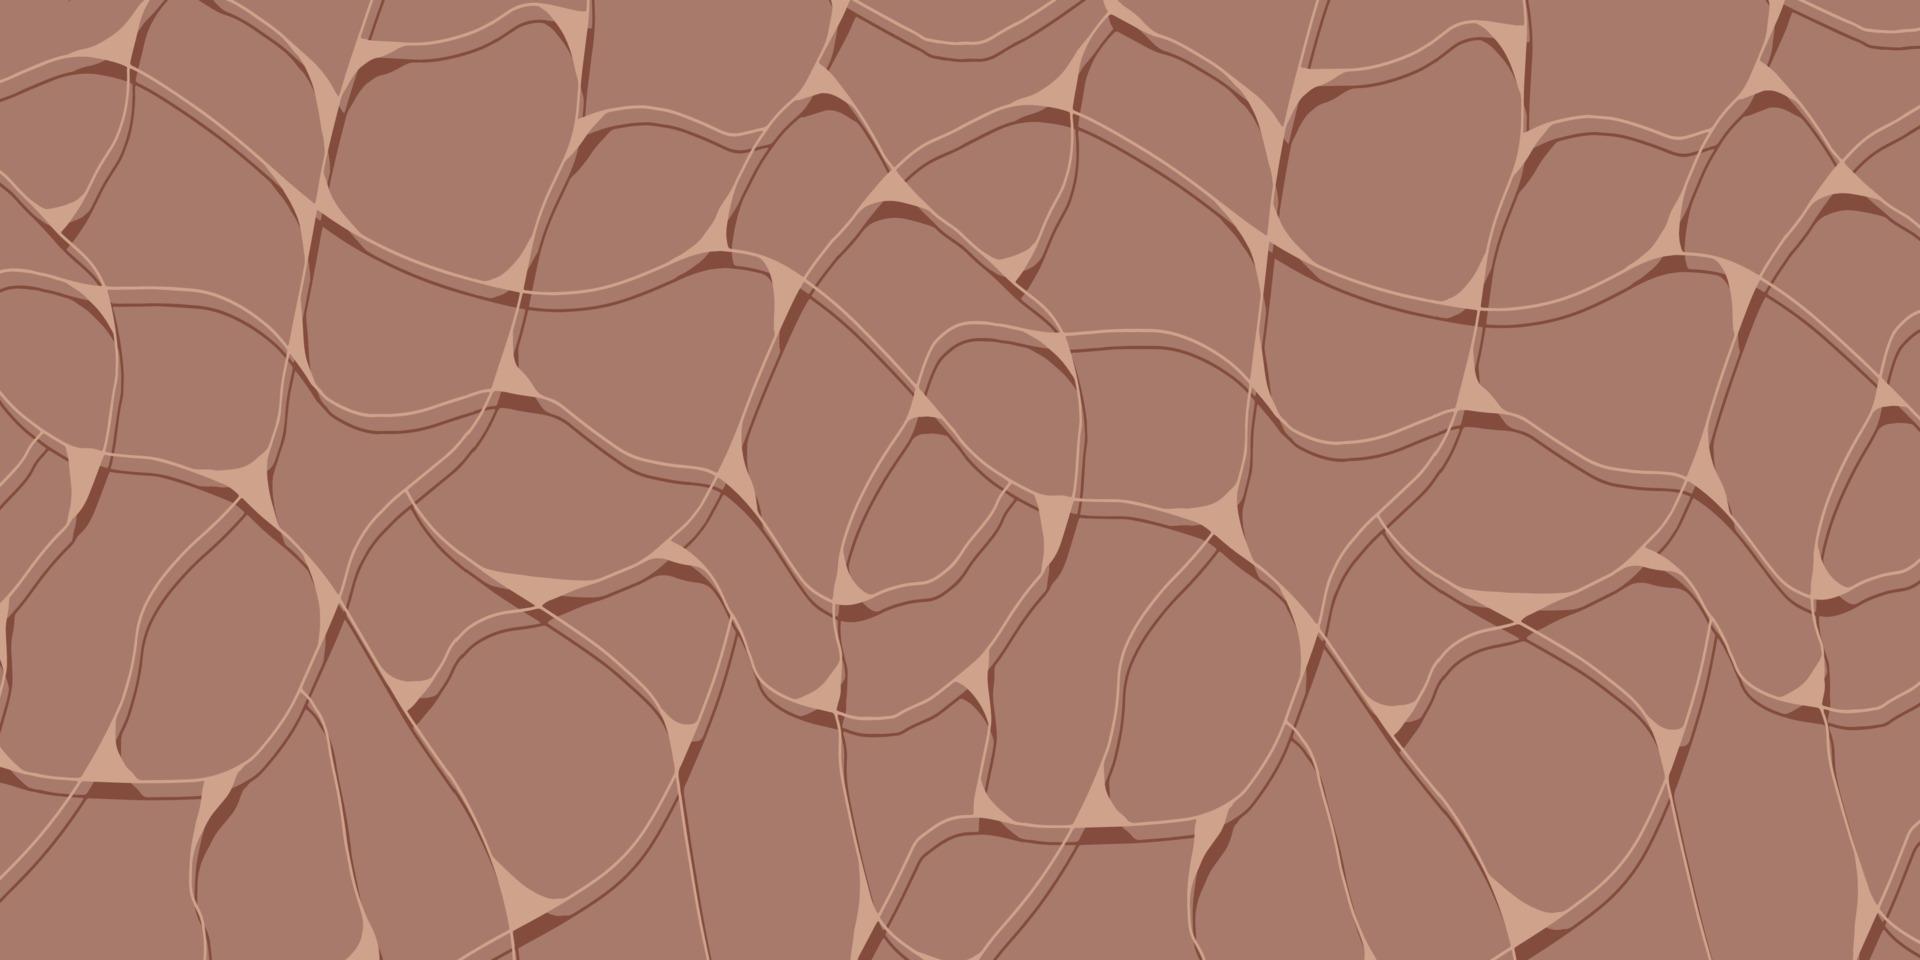 abstrakter rosa Hintergrund mit Gittermuster. geometrisches Muster mit visuellem Verzerrungseffekt. 3D-Gitteroberfläche. eine optische Täuschung. Op-Art vektor